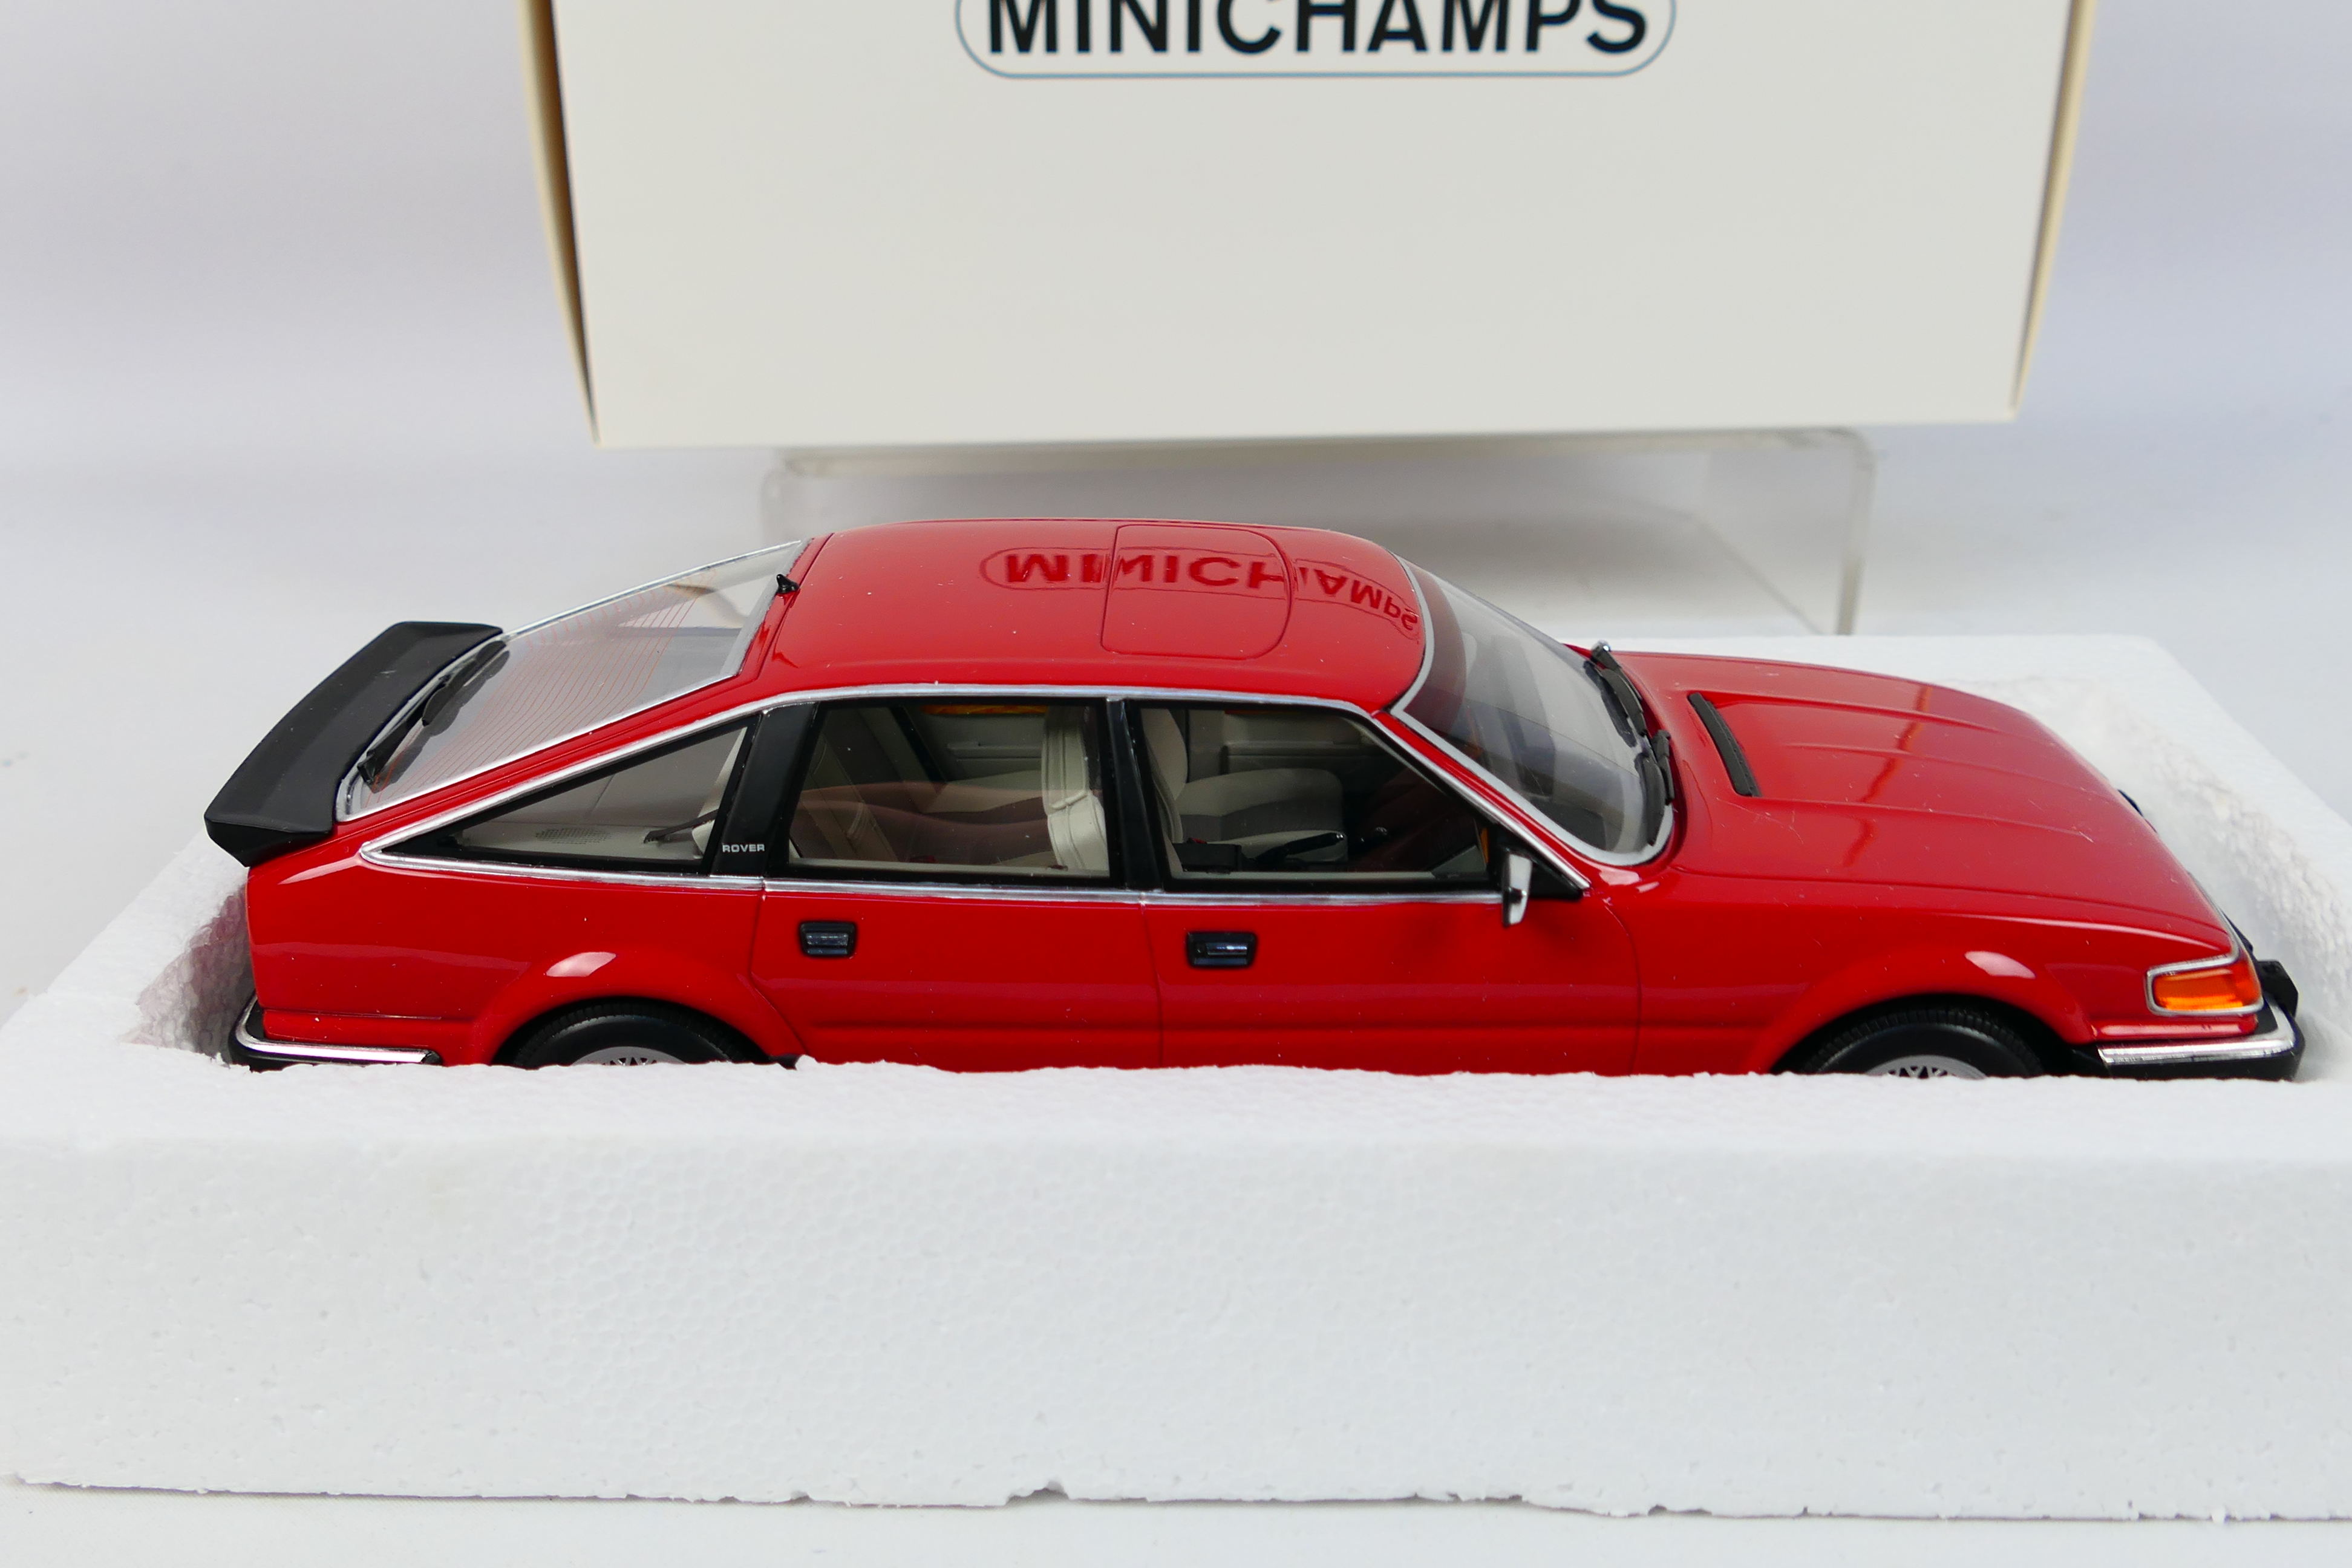 Minichamps - A boxed Minichamps #107138401 1:18 scale 1986 Rover Vitesse 3.5 V8. - Image 4 of 4